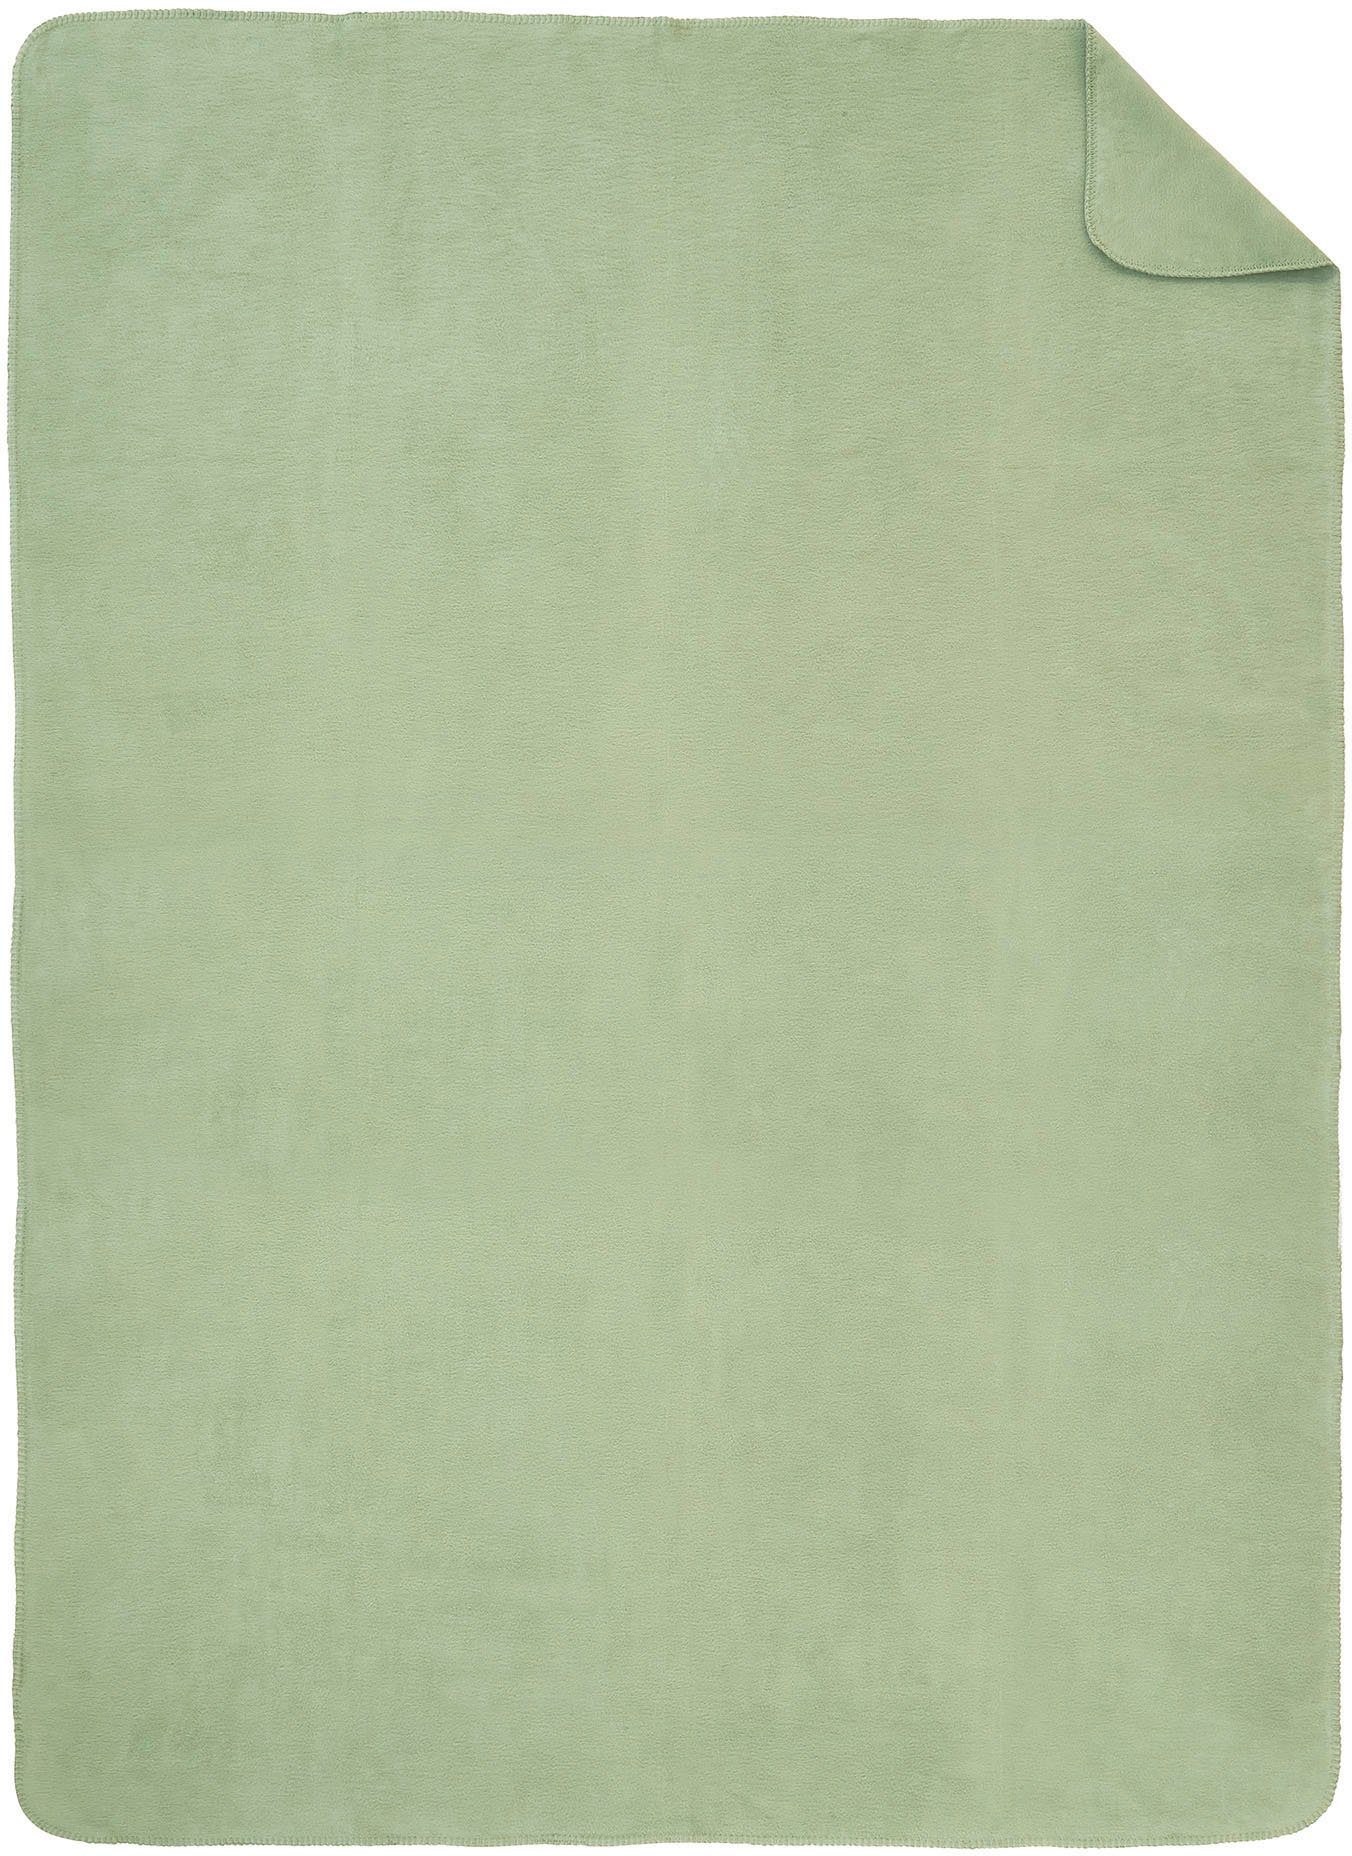 IBENA, Decke Uni Wohndecke Malaga, unifarben grün